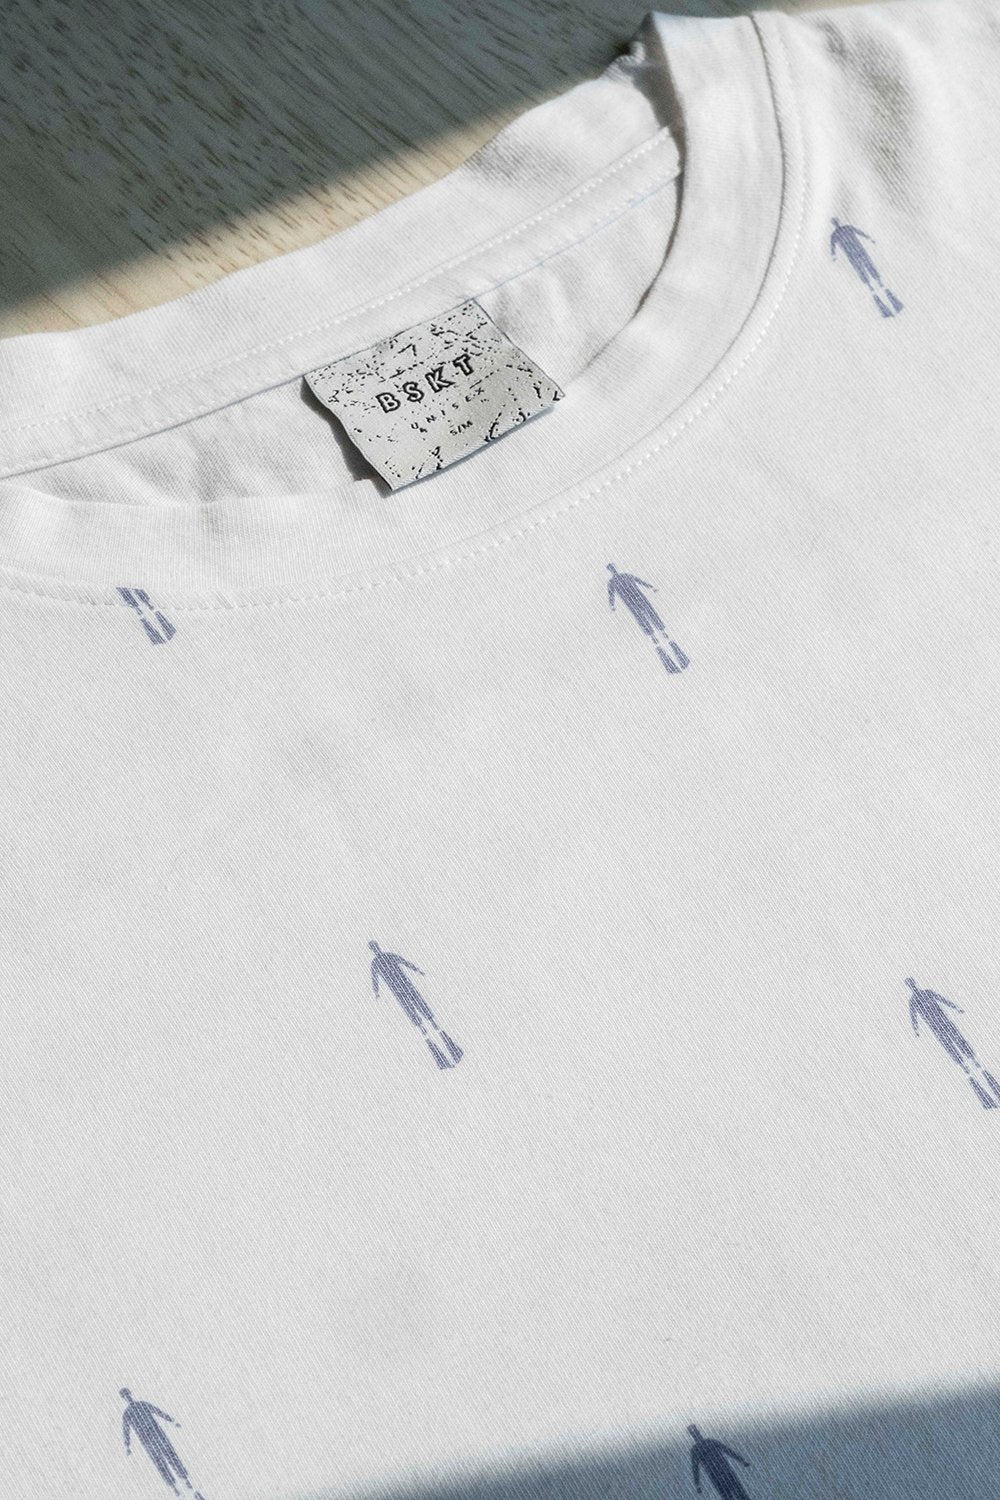 White Unisex T-shirt. Drop Shoulder. Gender-neutral fit.  Designed in Madras, Made in India  | BISKIT UNISEX CLOTHING LABEL